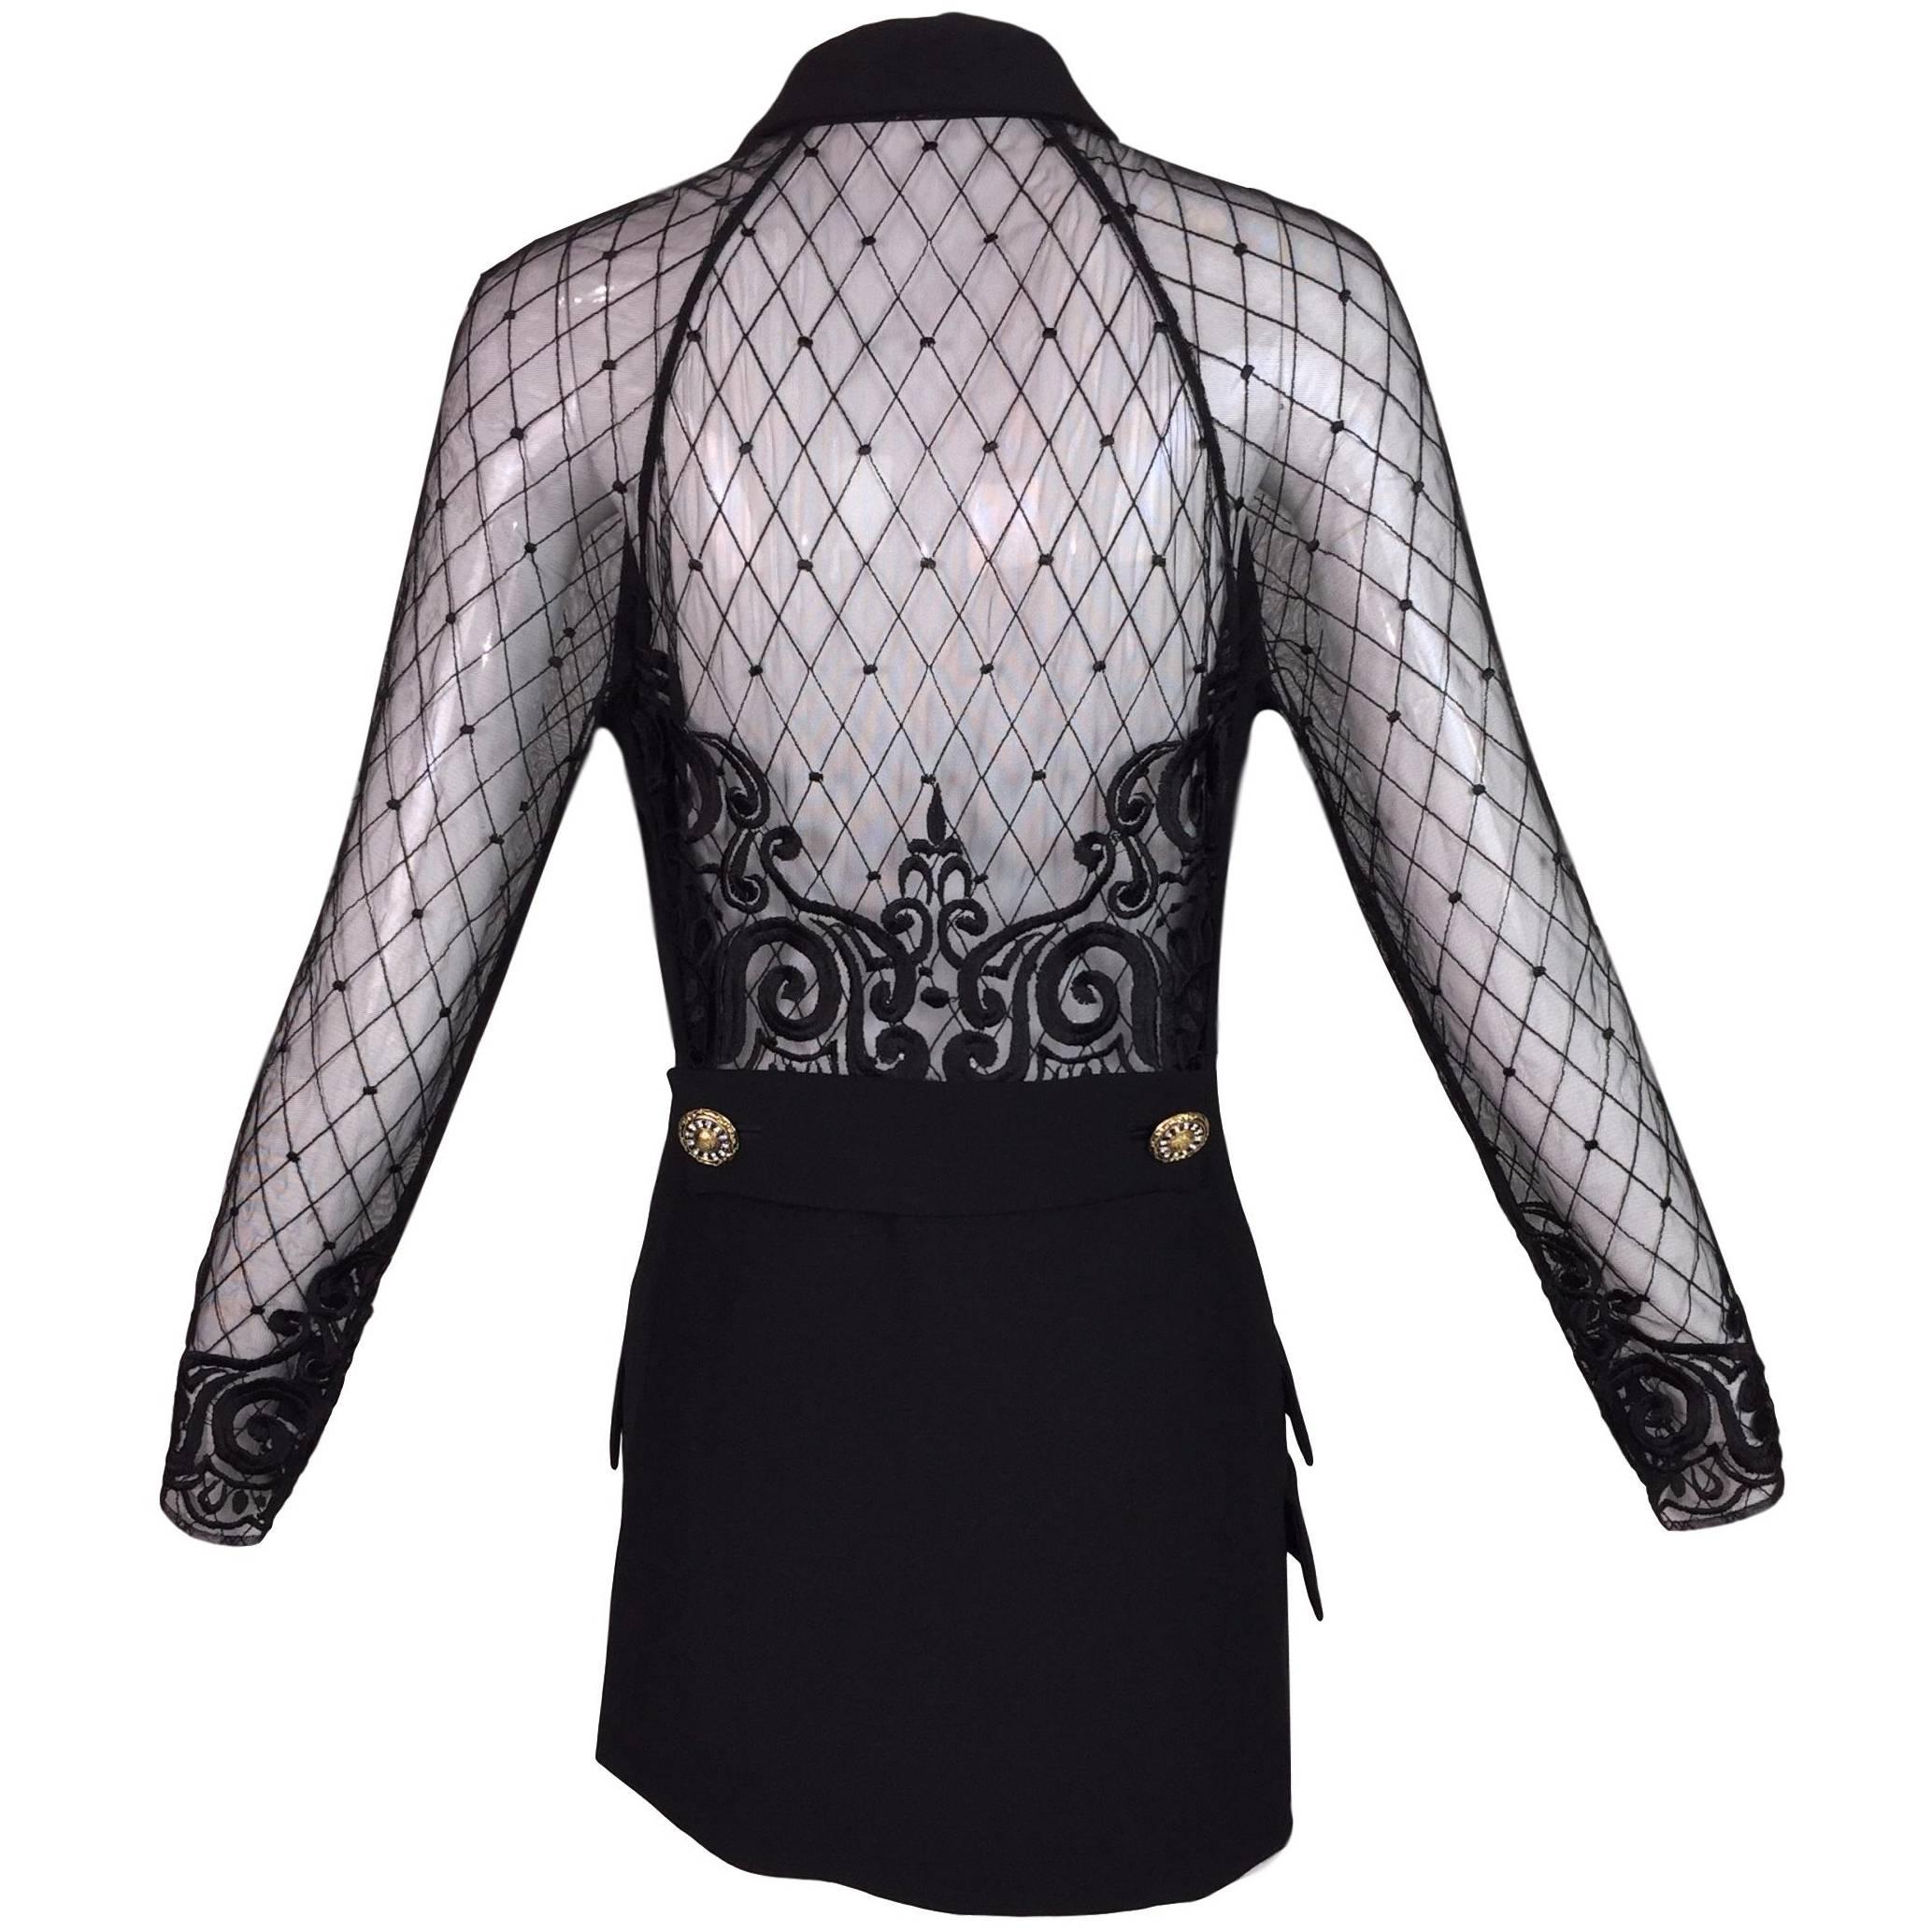 S/S 1994 Gianni Versace Embroidered Black Sheer Mesh Mini Dress Jacket